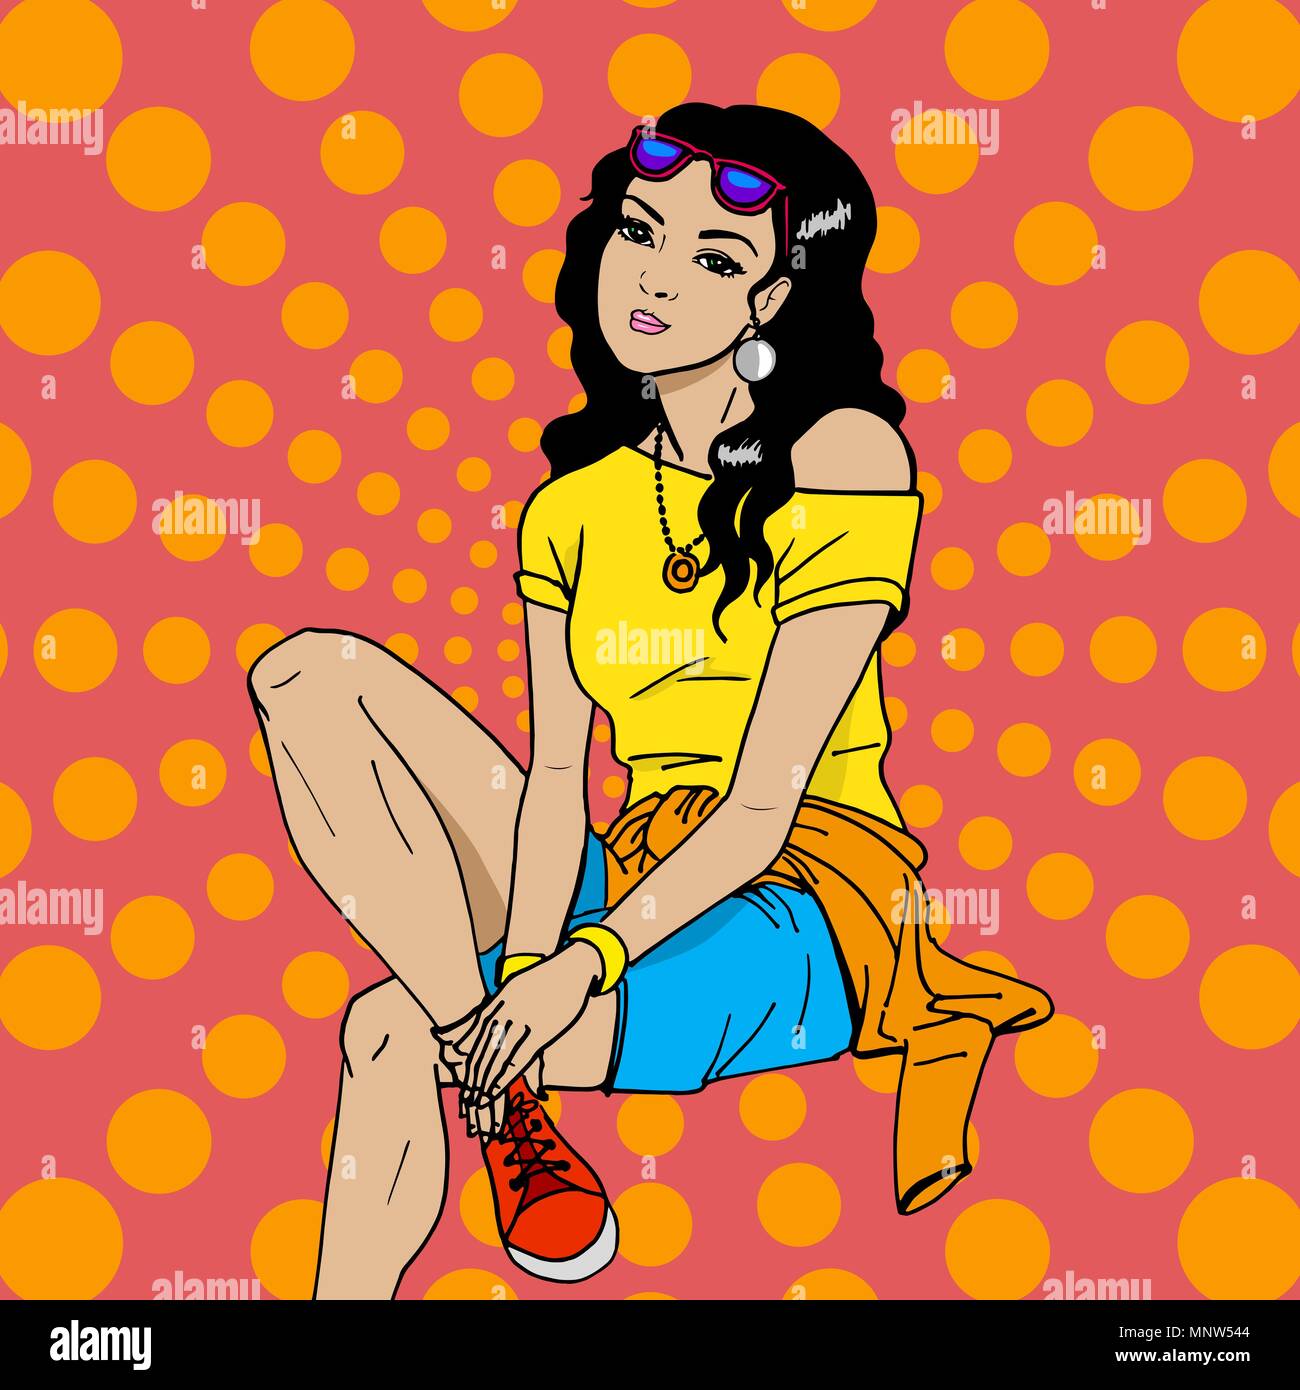 Vector illustration of a pop art girl teenager Stock Vector